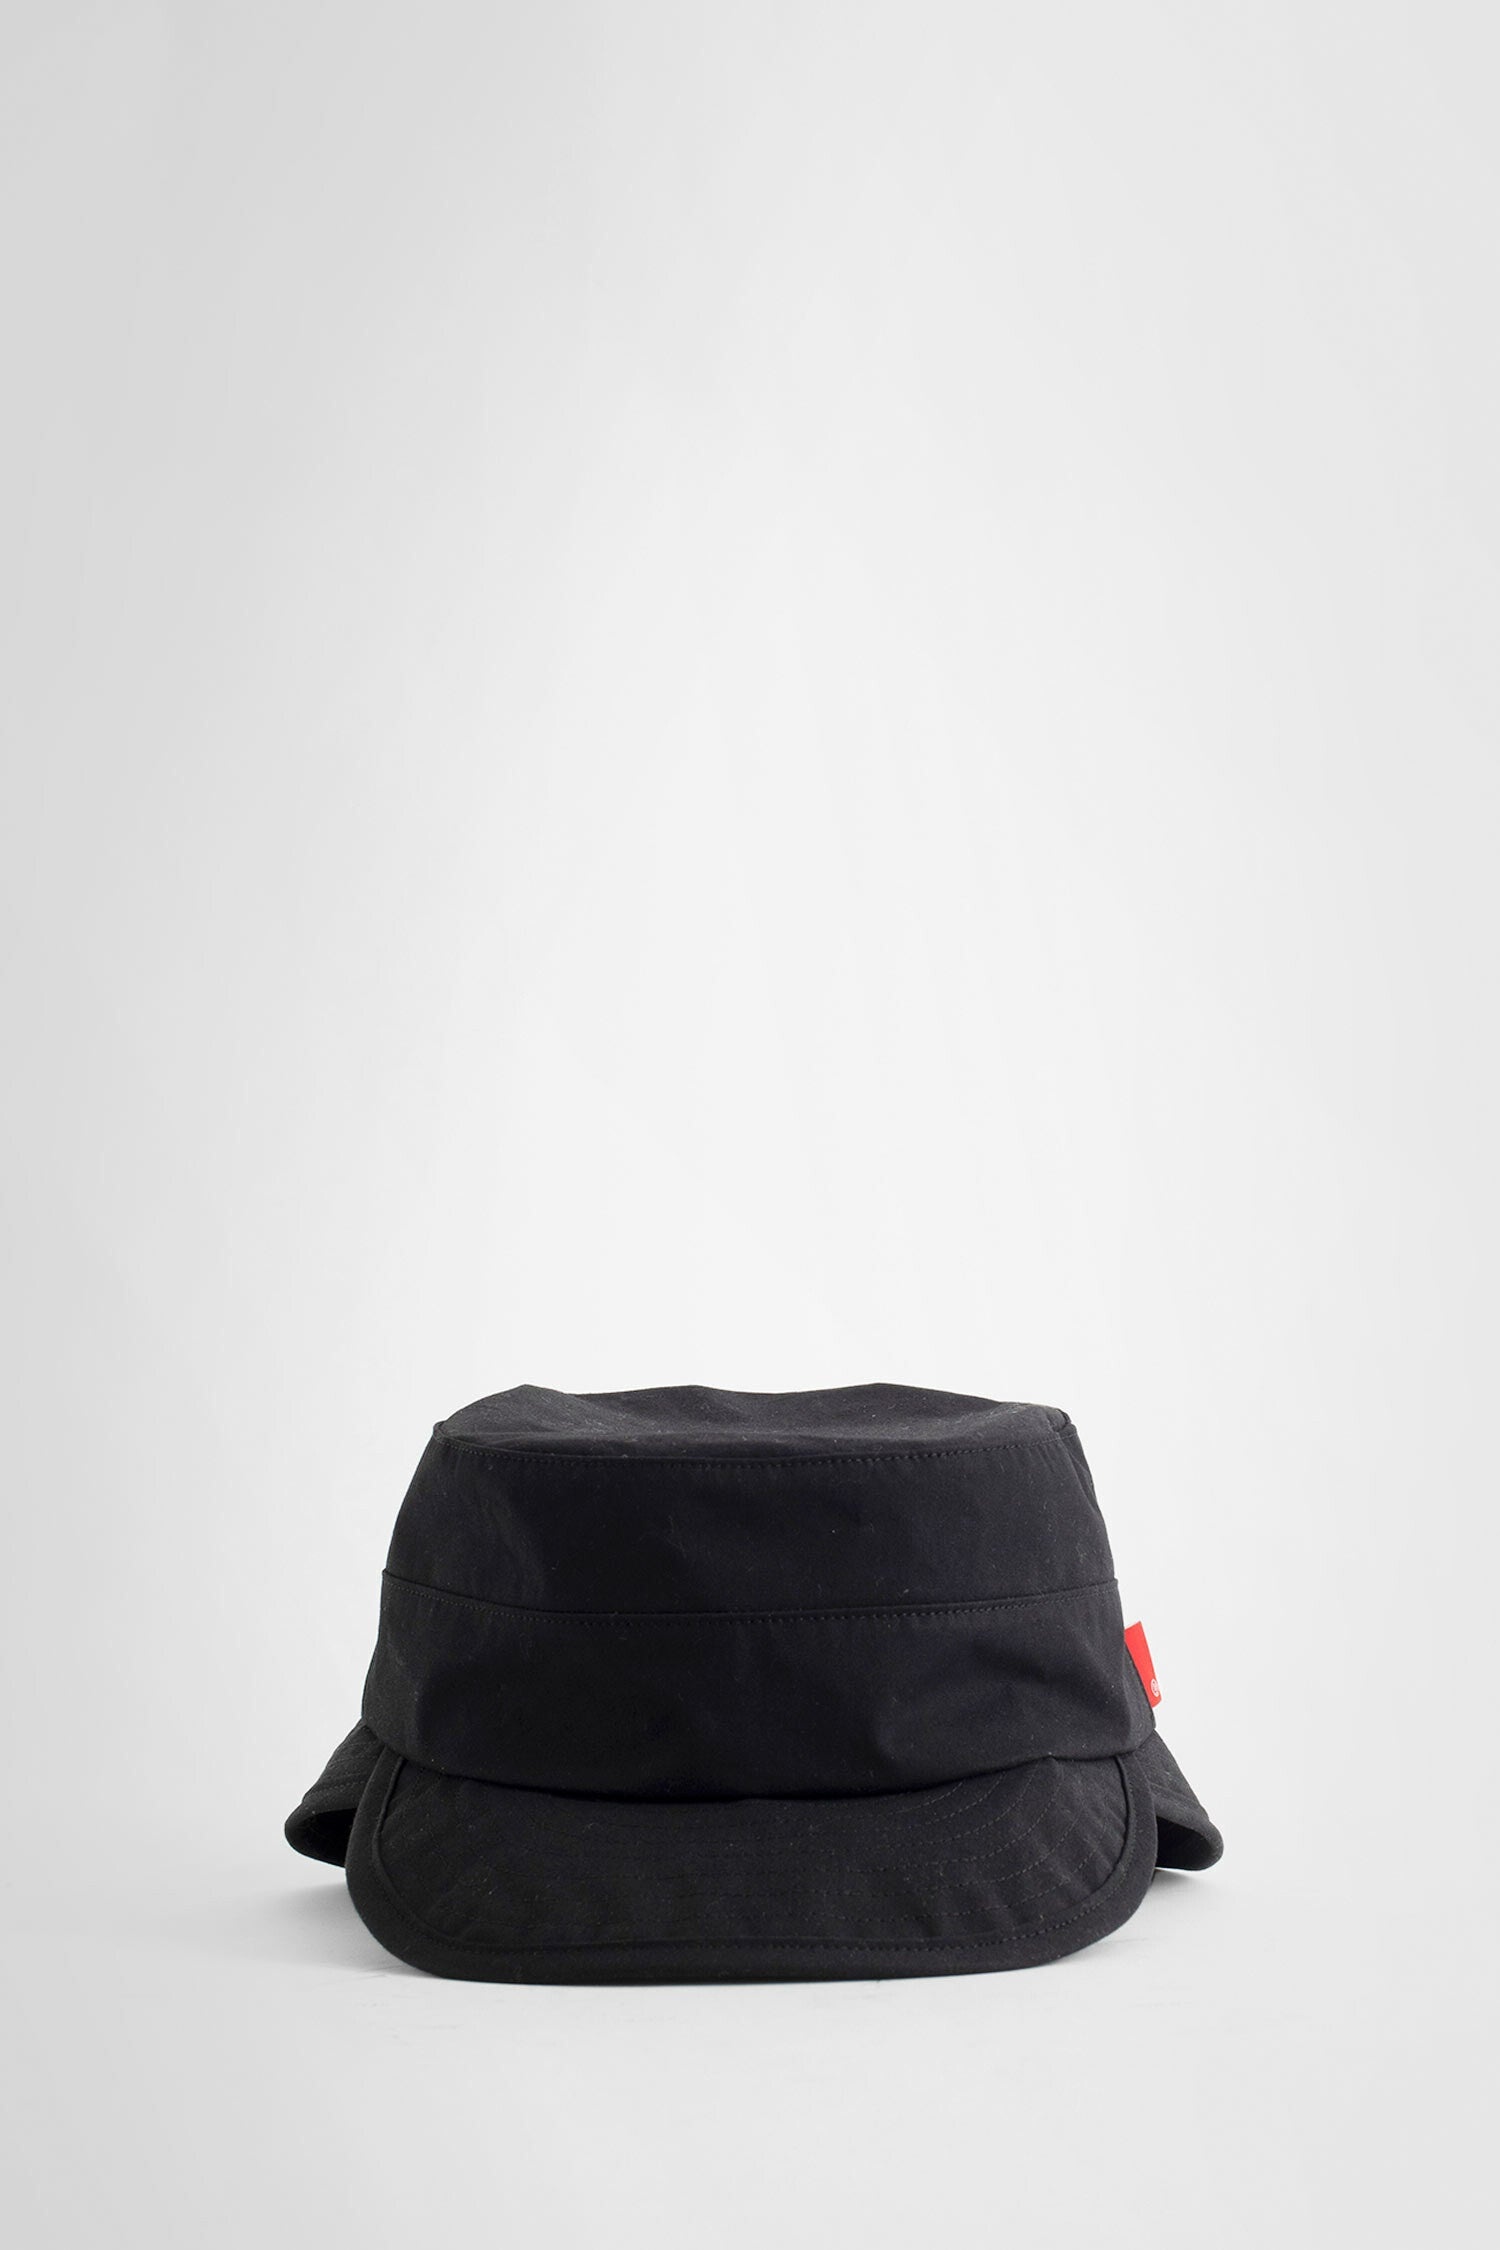 UNDERCOVER MAN BLACK HATS - 1